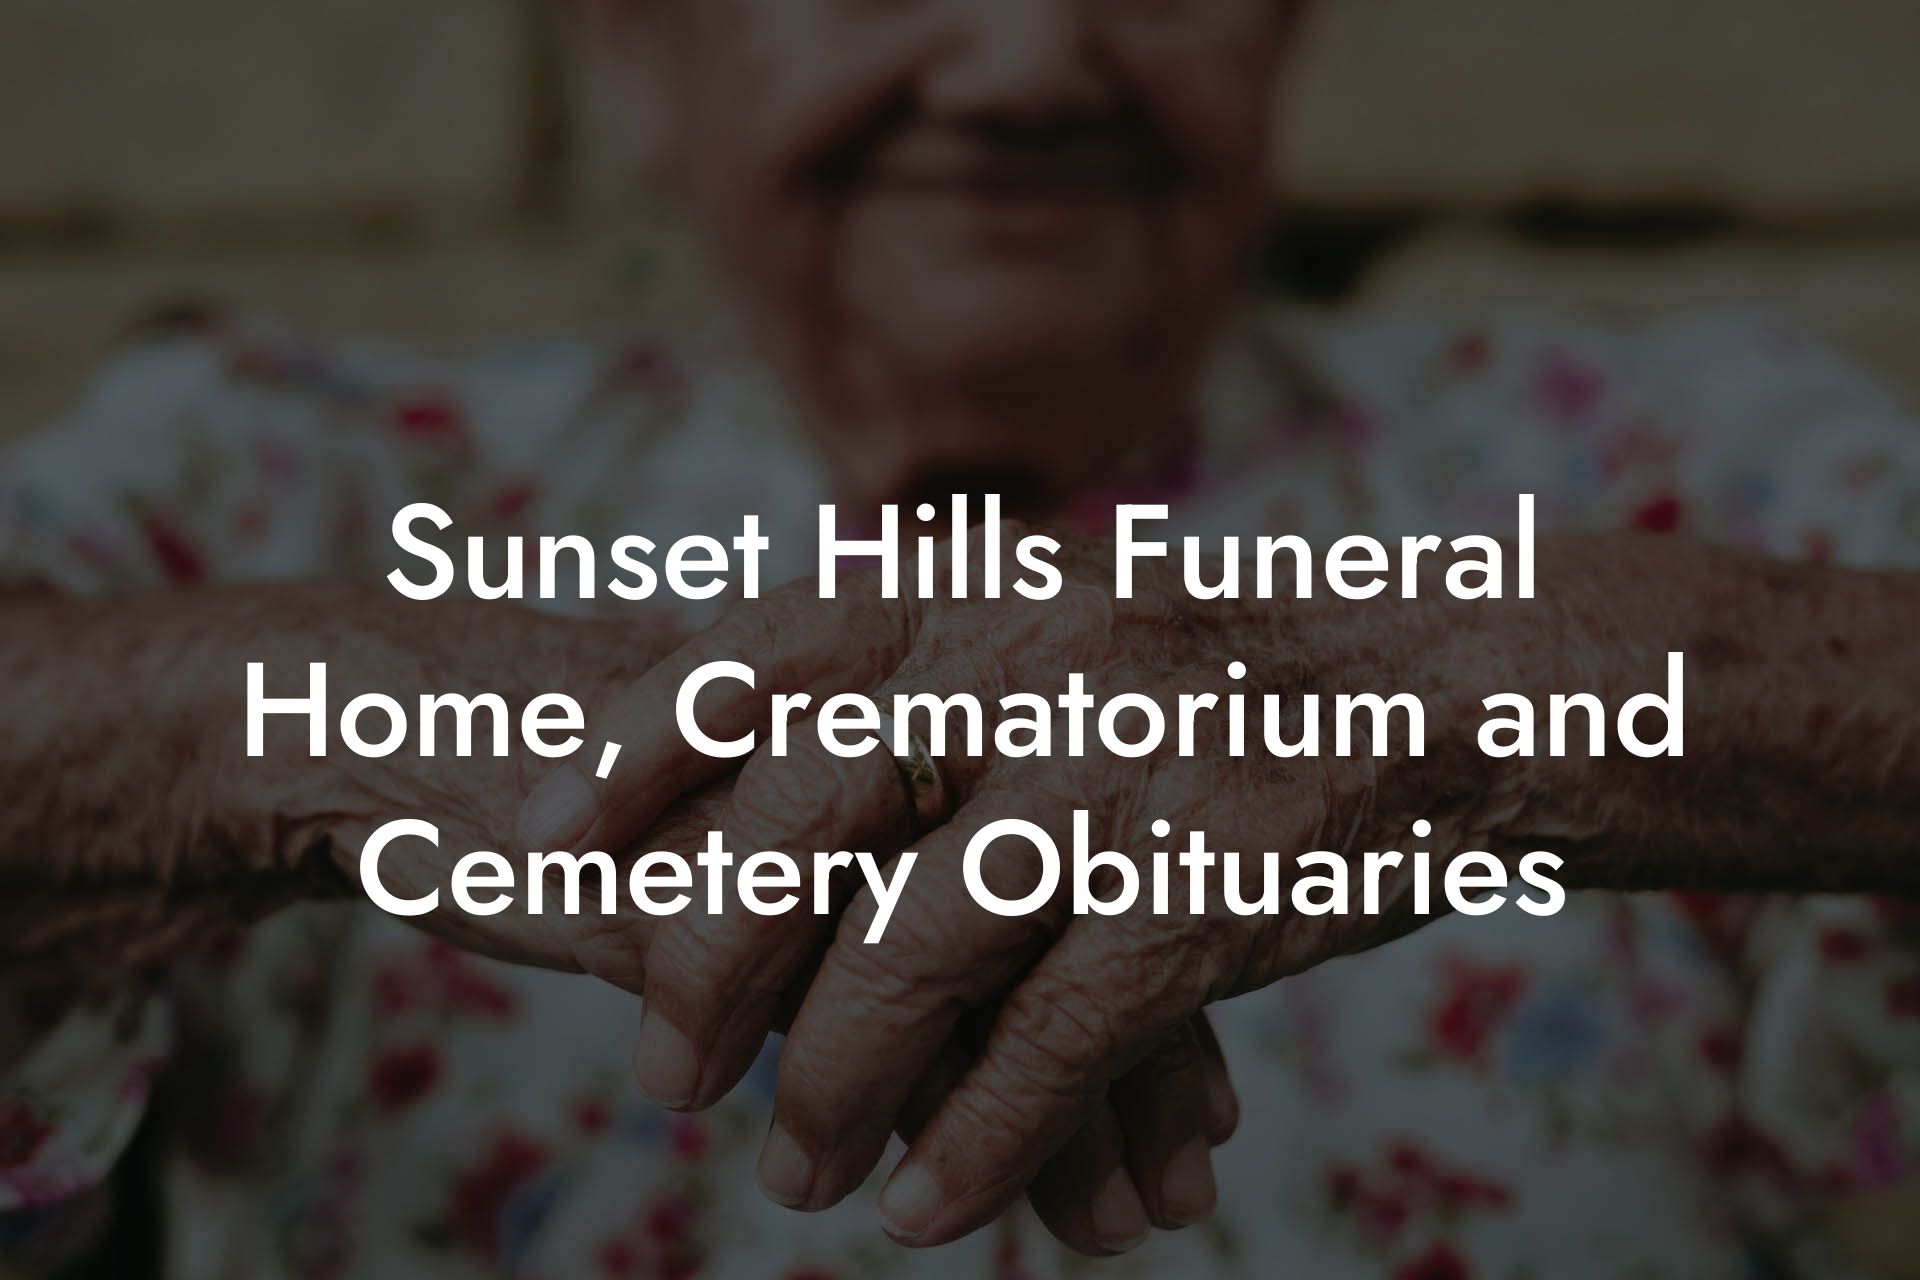 Sunset Hills Funeral Home, Crematorium and Cemetery Obituaries